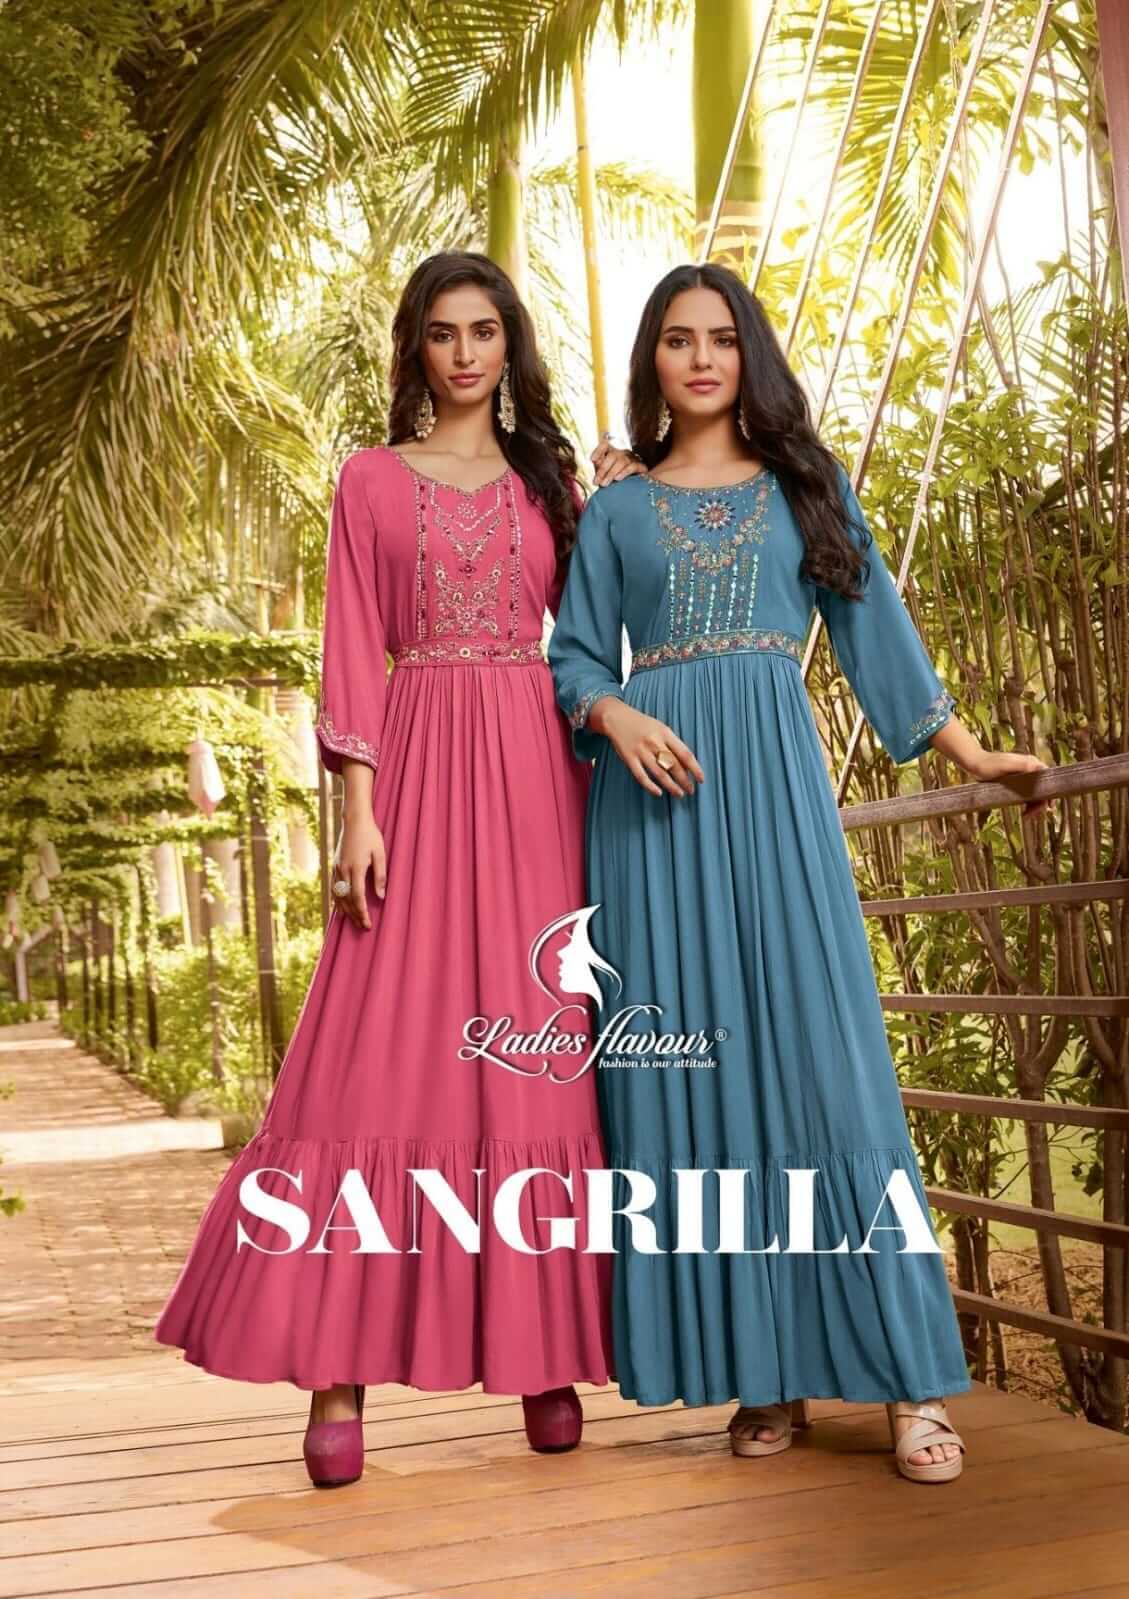 Ladies Flavour Sangrilla Gowns collection 5